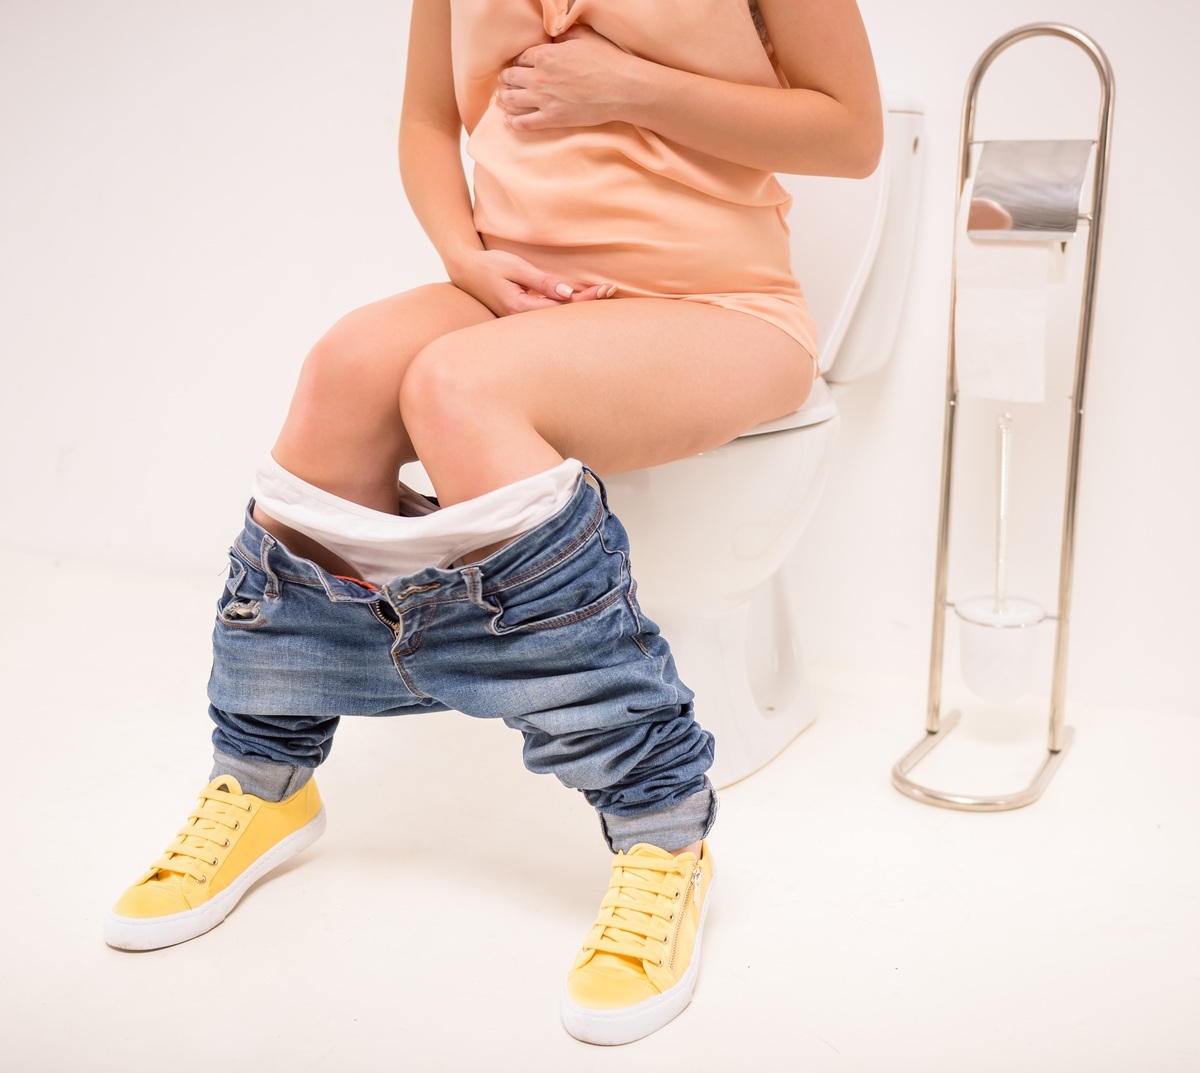 Mulher grávida sentada no vaso sanitário - foto: Yuriy Rudyy/ShutterStock.com